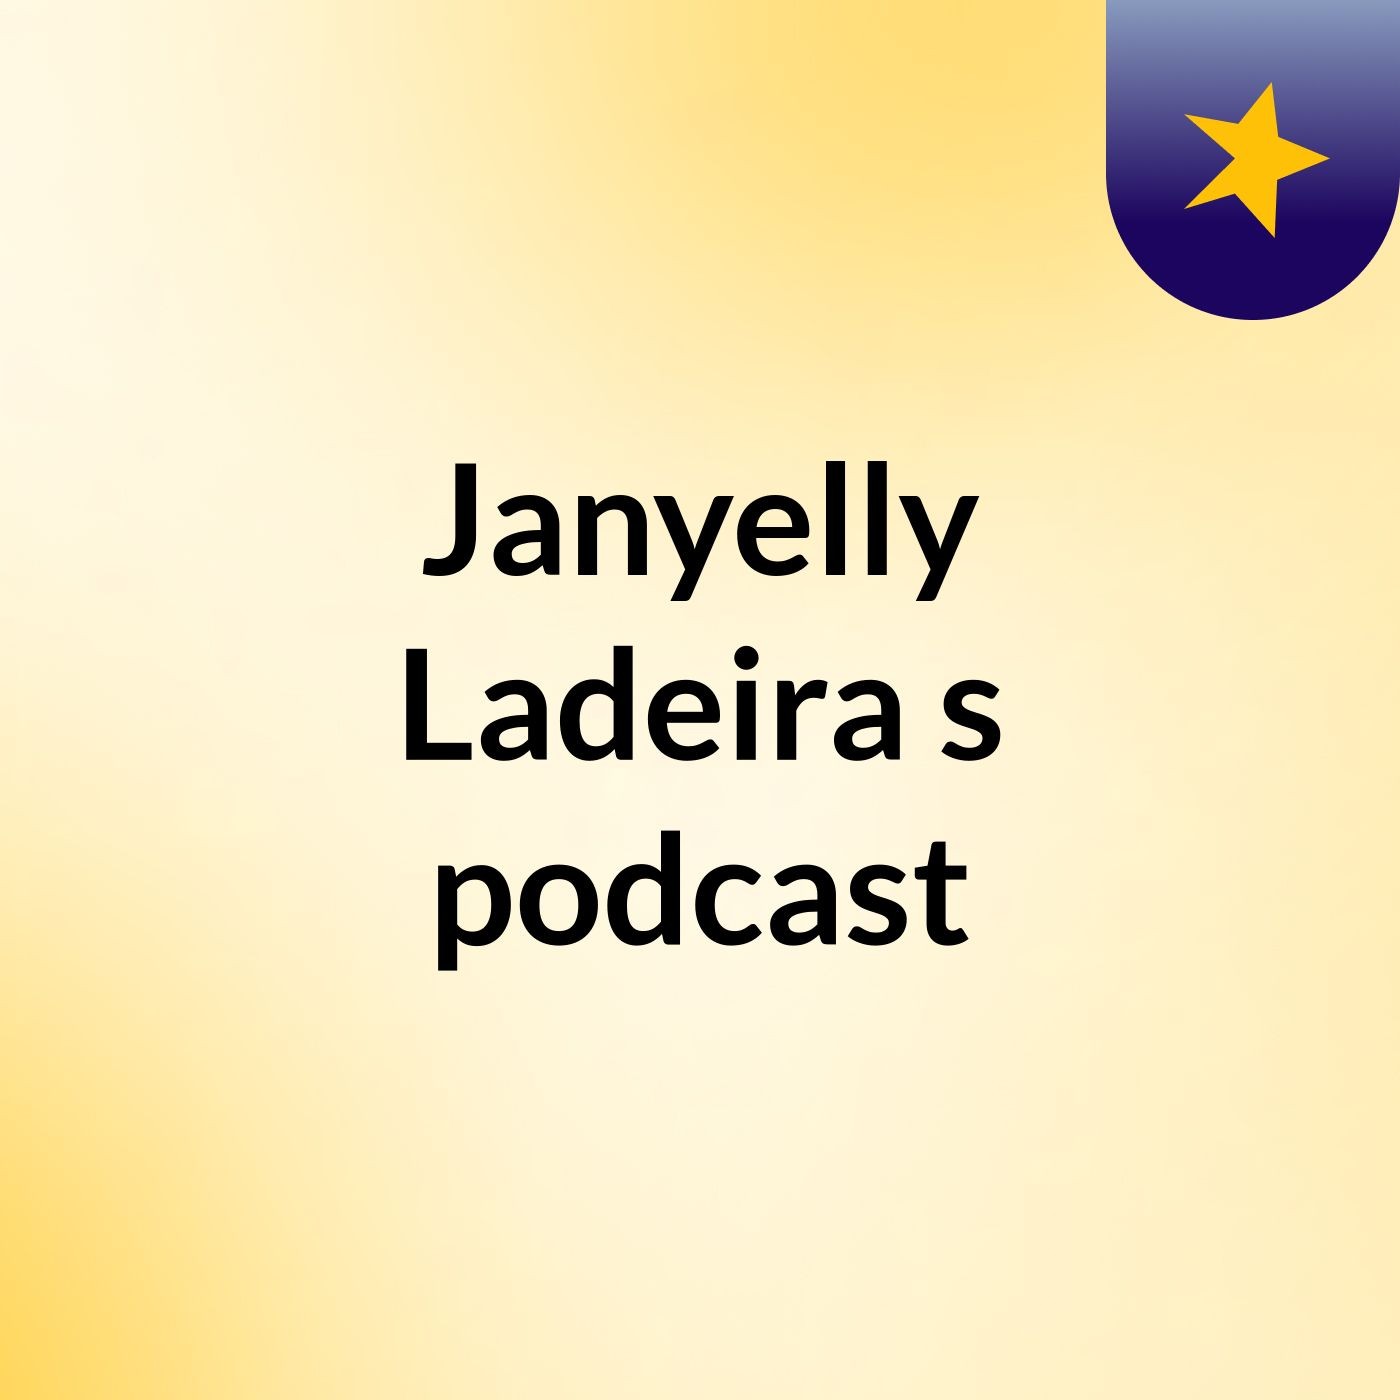 Janyelly Ladeira's podcast